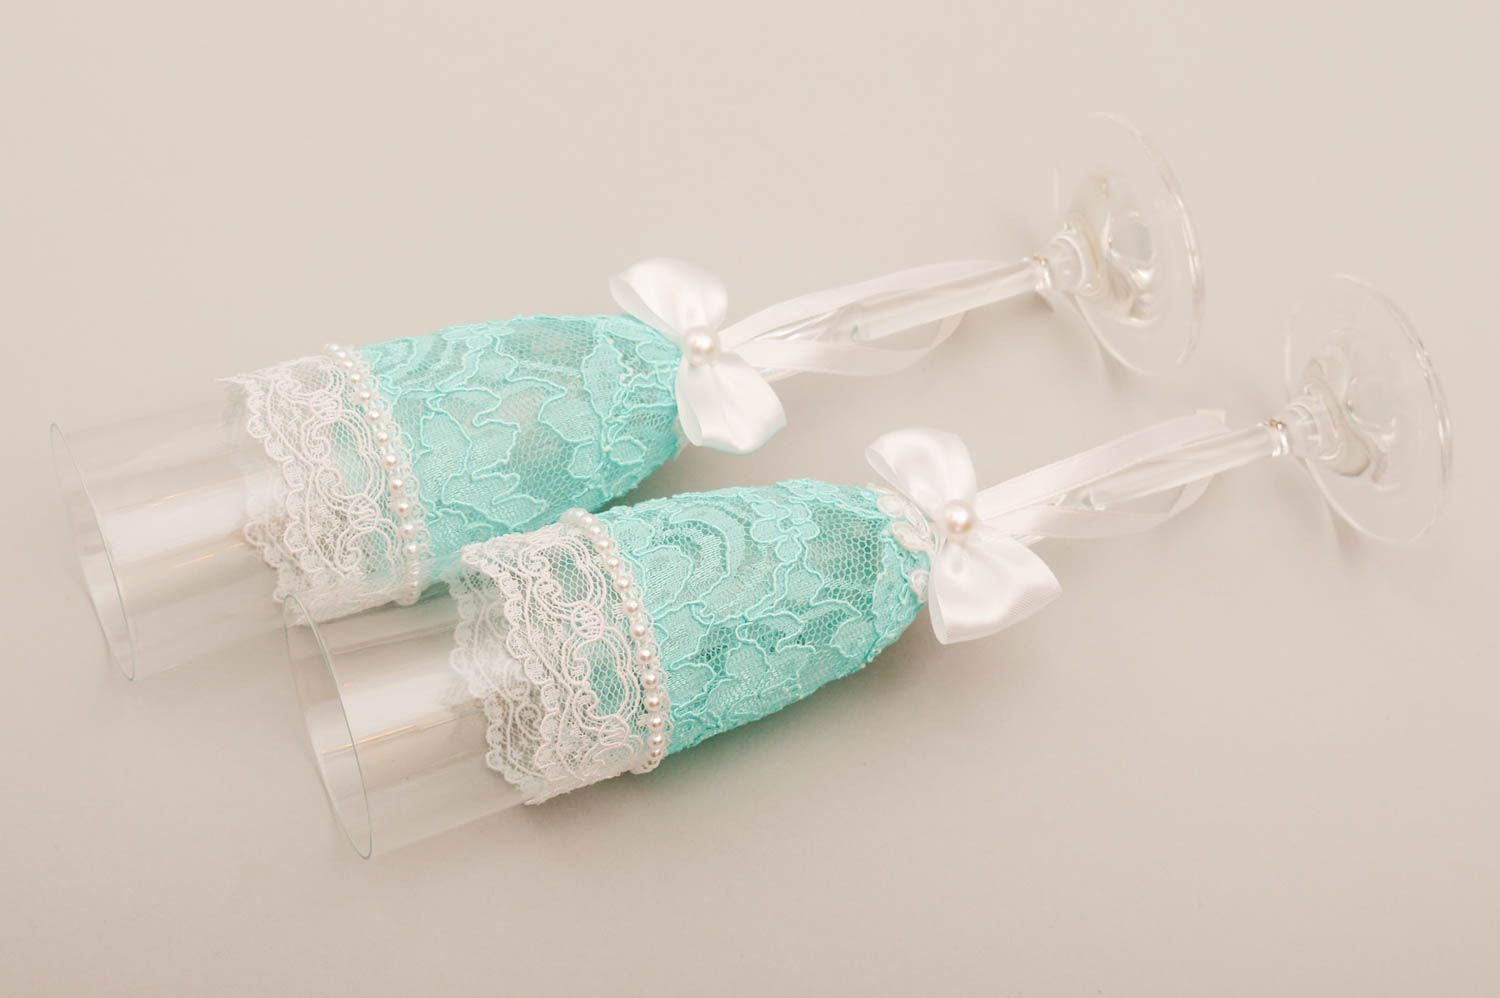 Handmade wedding glasses 2 decorative wine glasses wedding decor wedding gifts photo 4